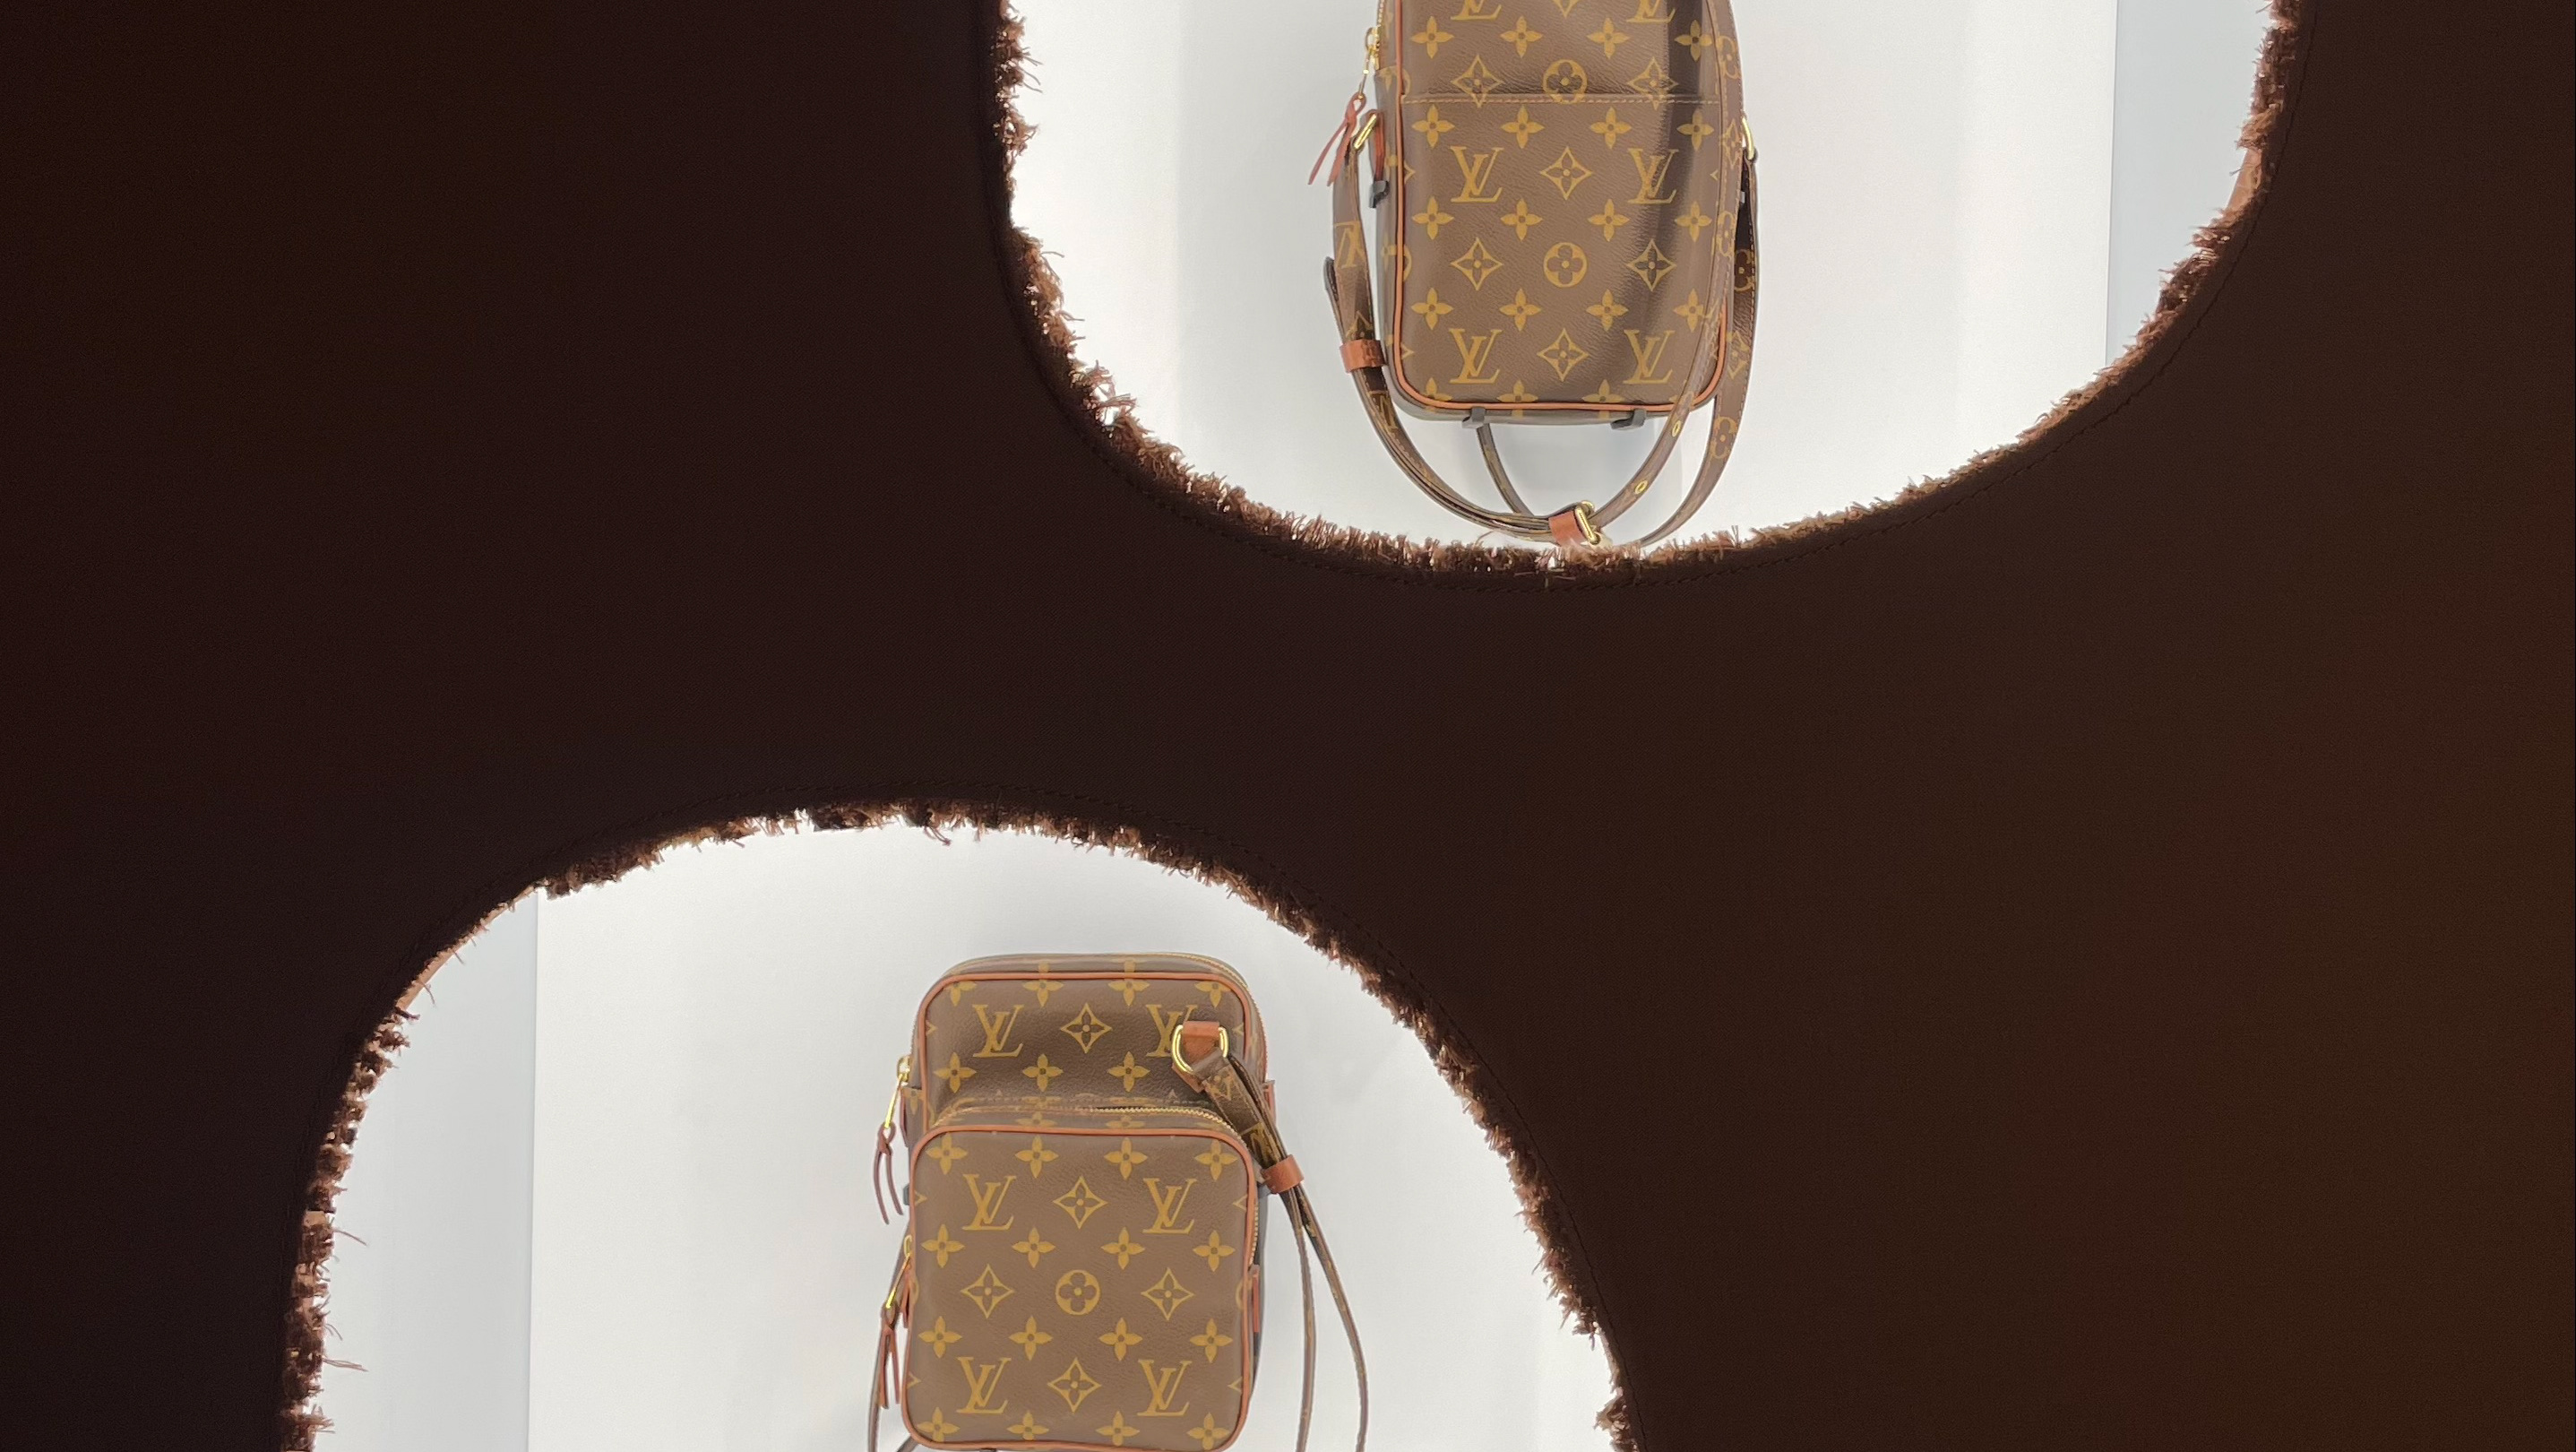 Louis Vuitton on X: A collaboration celebrating French Savoir